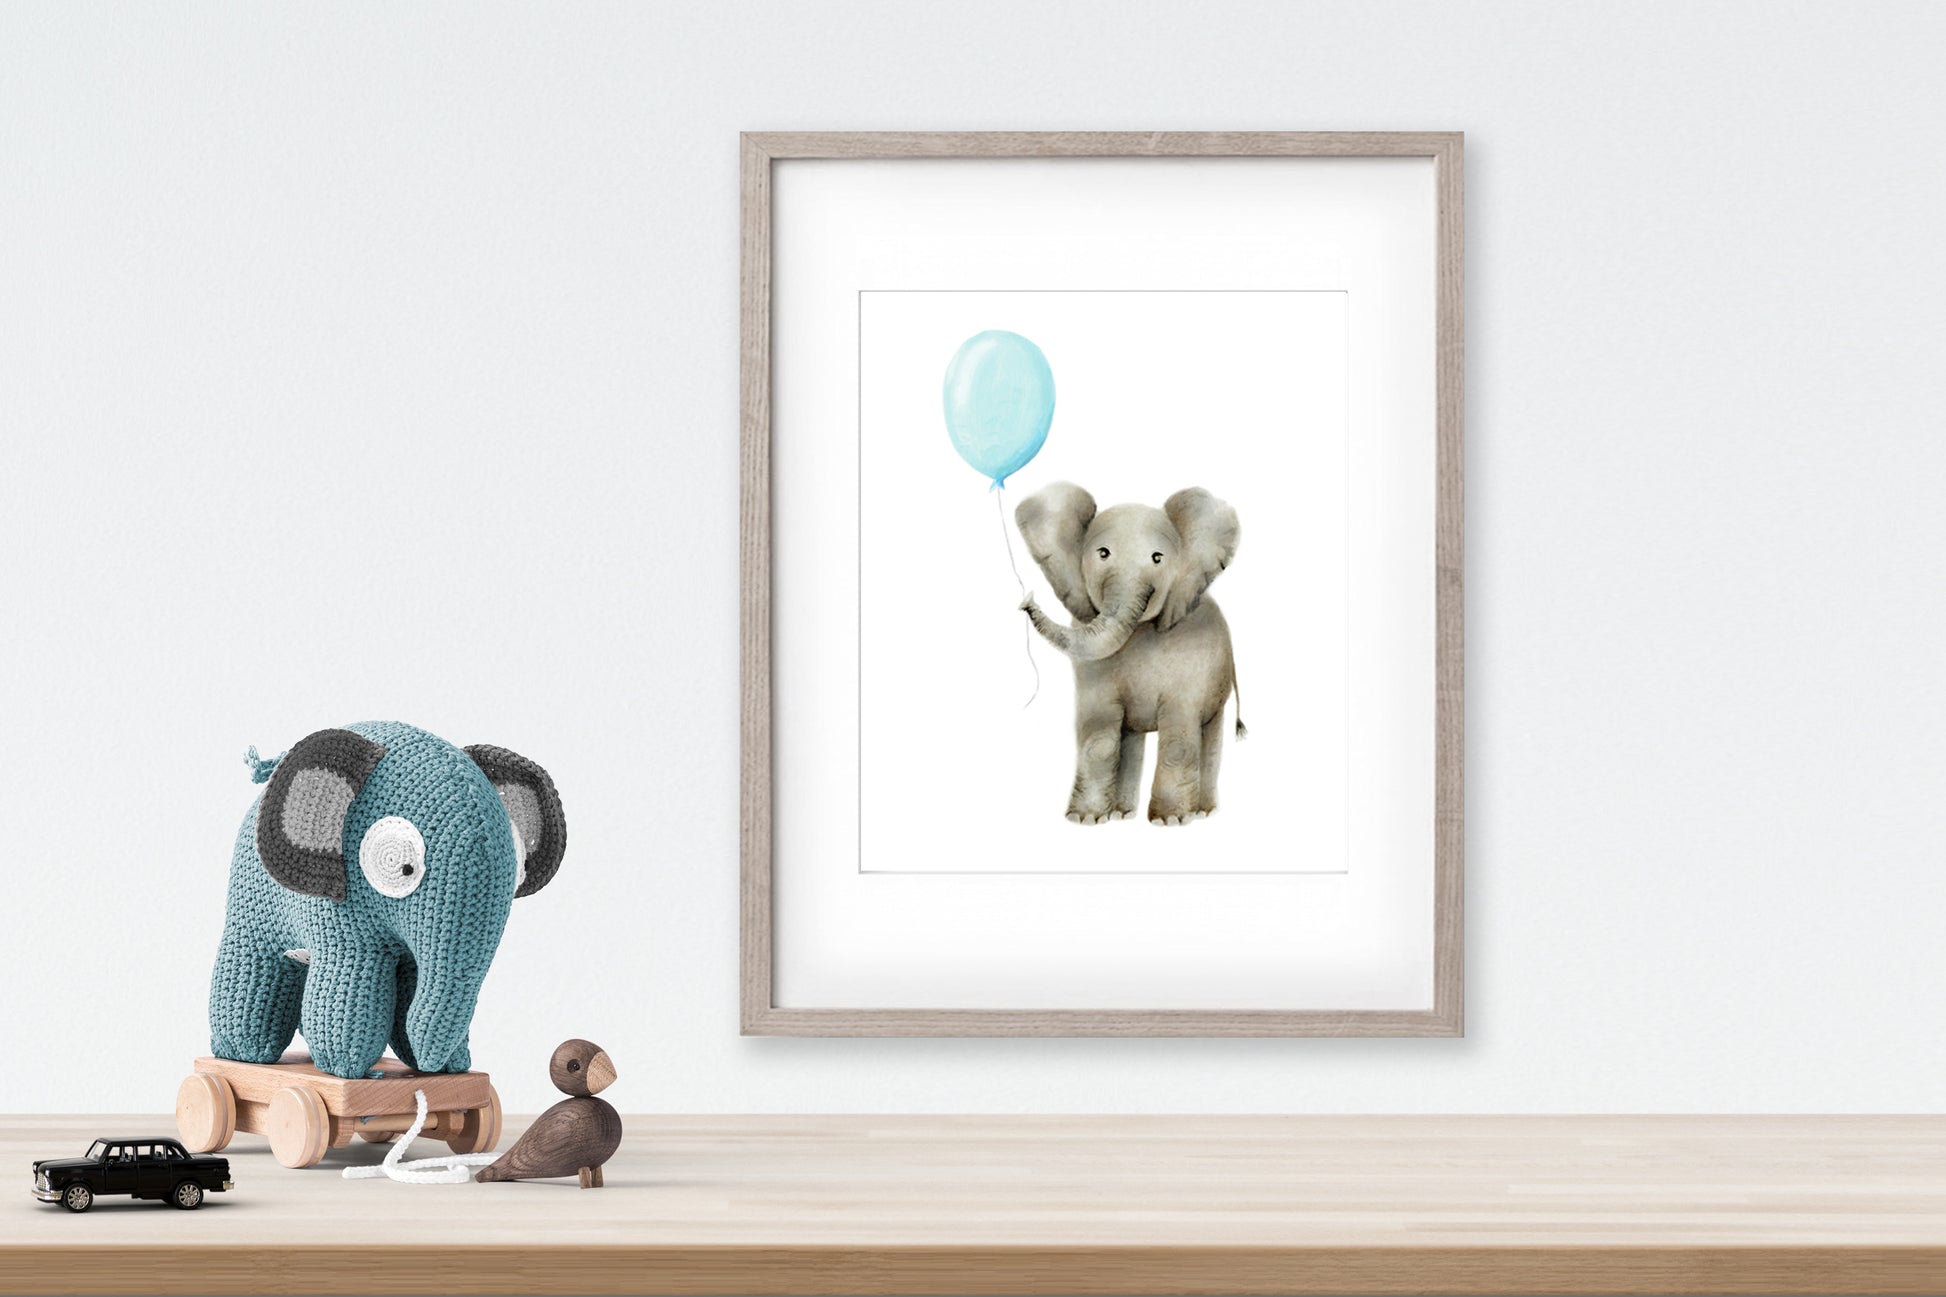 Baby Elephant with Round Balloon - Studio Q - Art by Nicky Quartermaine Scott